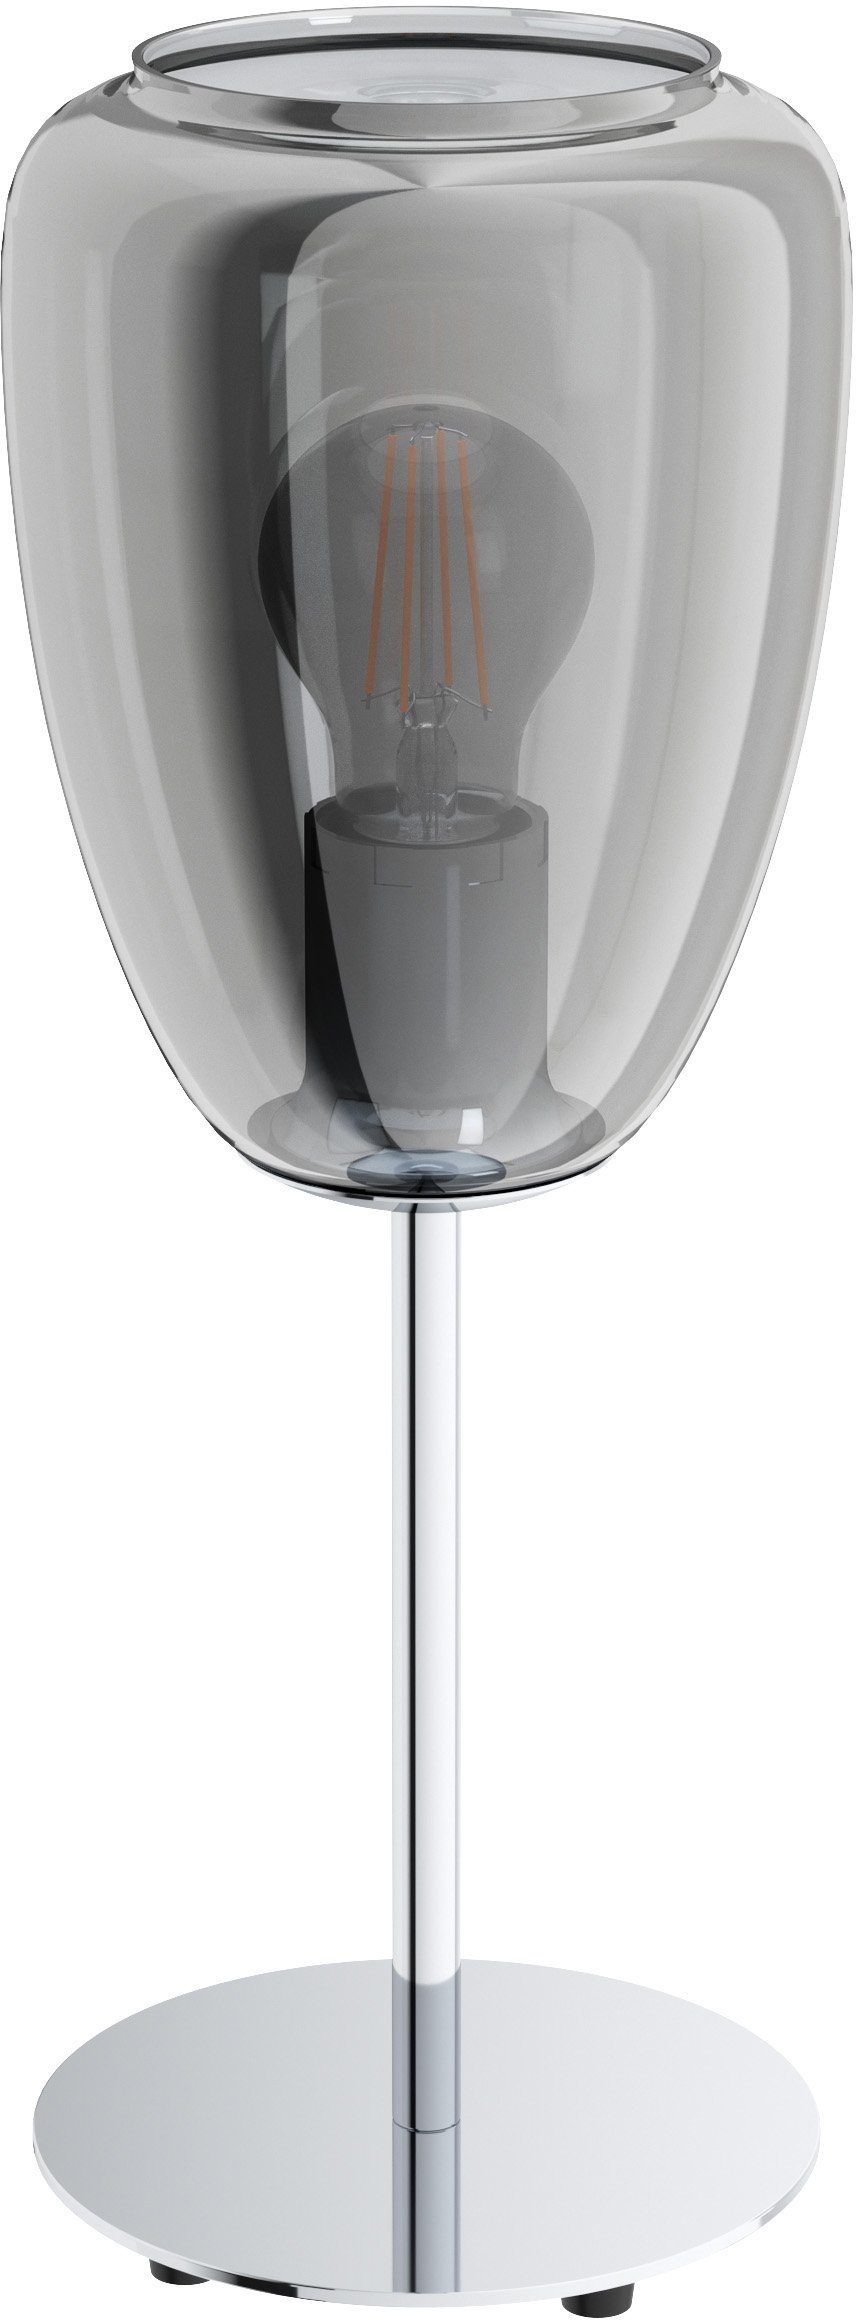 eglo tafellamp alobrase chroom - oe 15 x h 41 cm - tafellamp - nachtkastje - lamp grijs